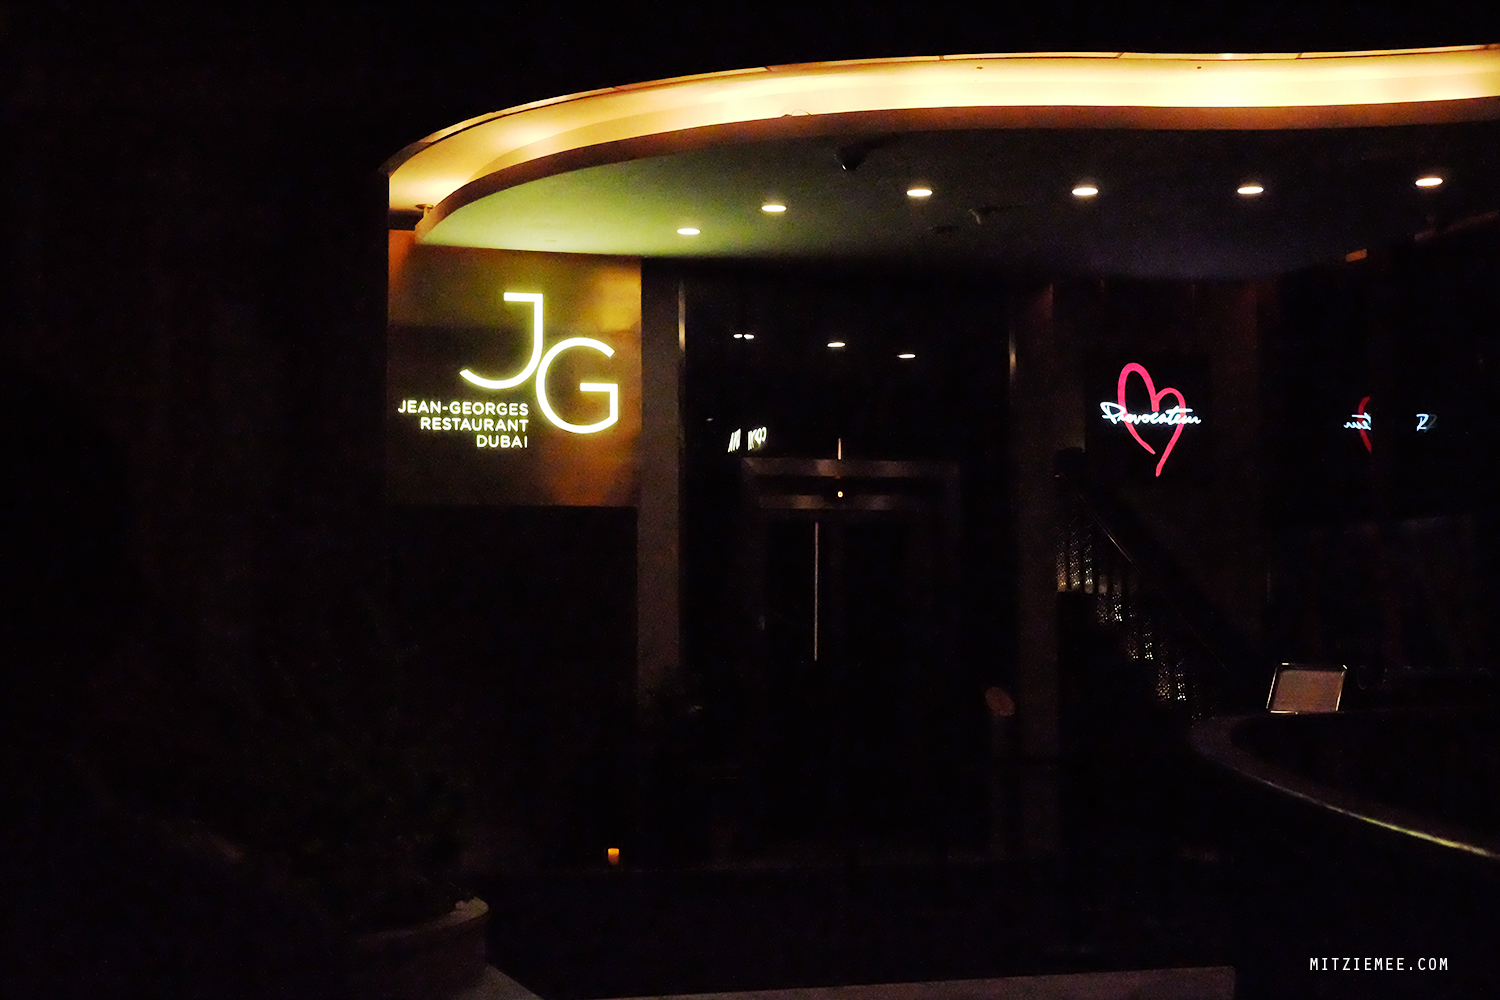 Jean-Georges Dining Room i Dubai